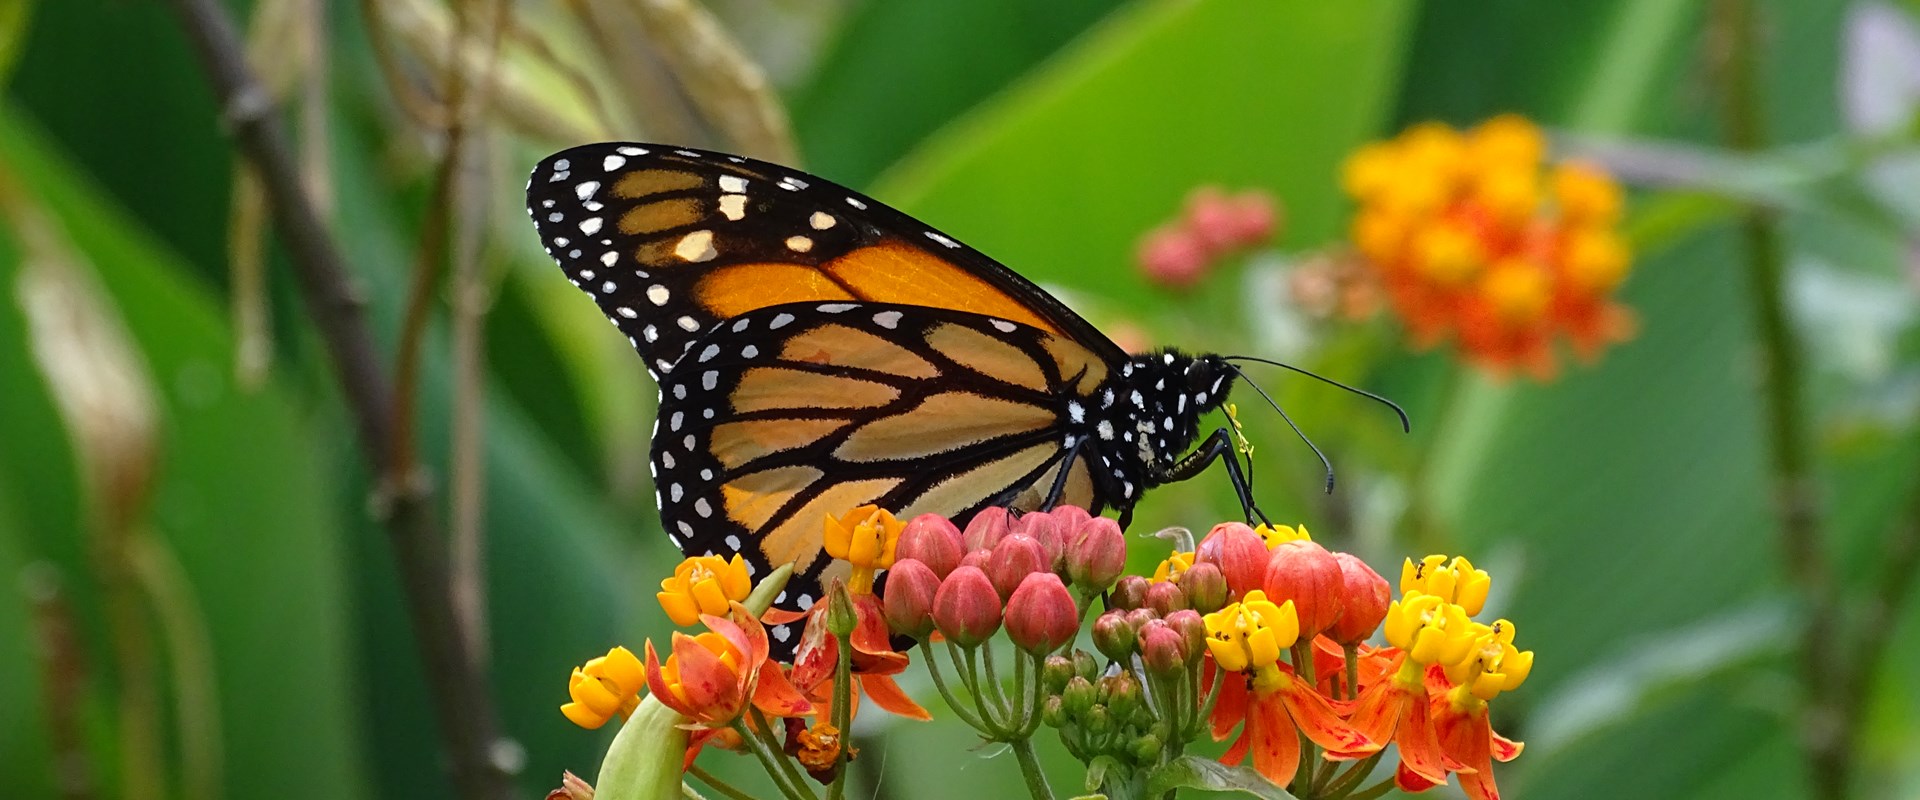 https://www.nms.ac.uk/media/1162539/1_monarch-butterfly_costarica_aw.jpg?anchor=center&mode=crop&width=1920&height=800&rnd=133347479990000000